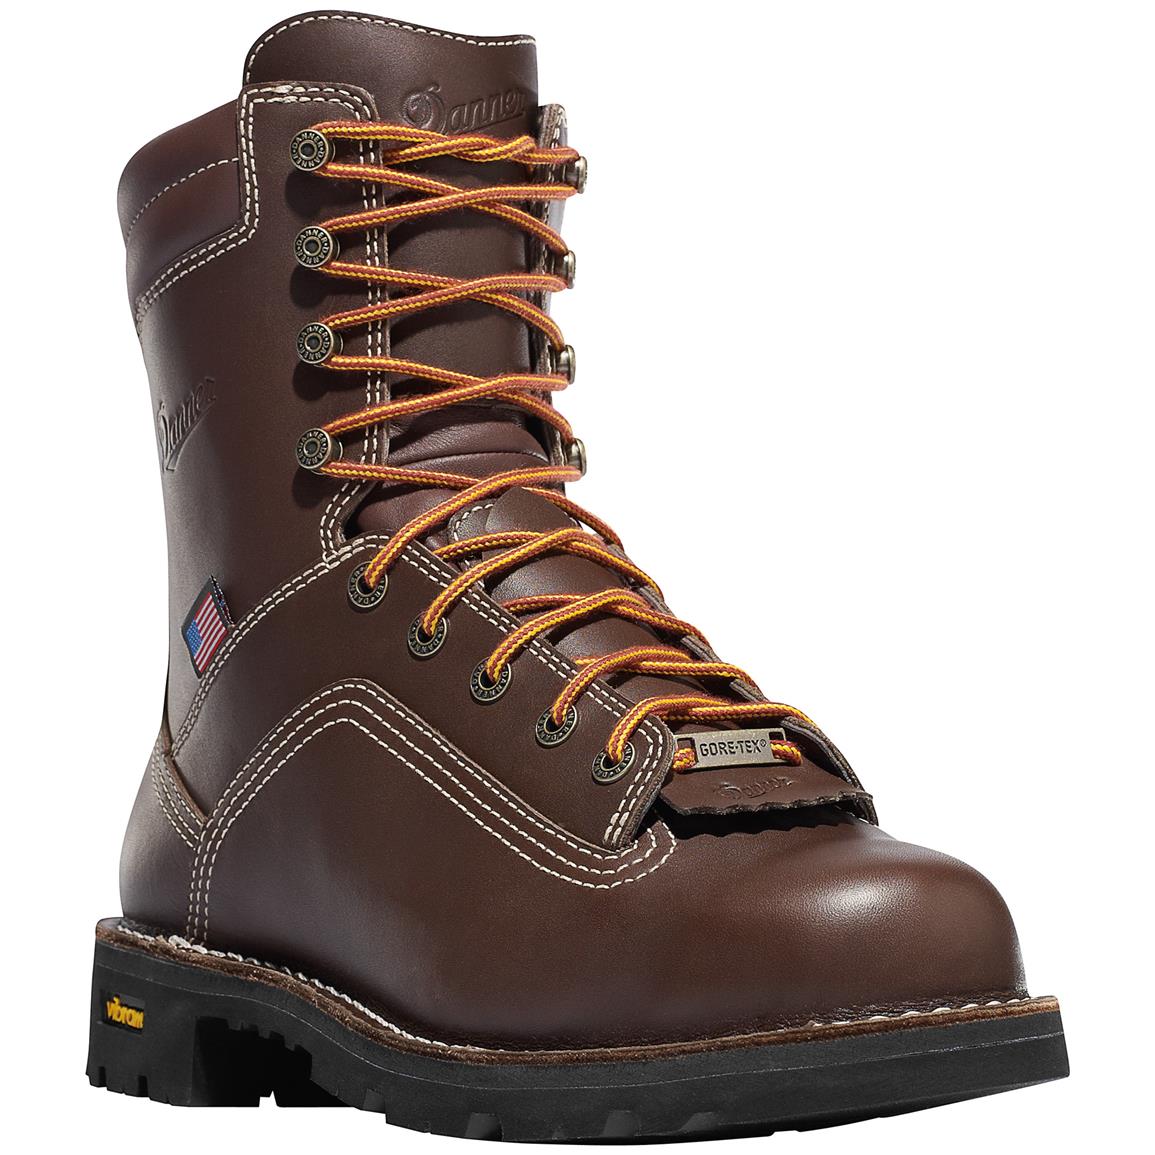 Danner Men's Quarry USA Waterproof Alloy Toe Work Boots, GORE-TEX, Brown